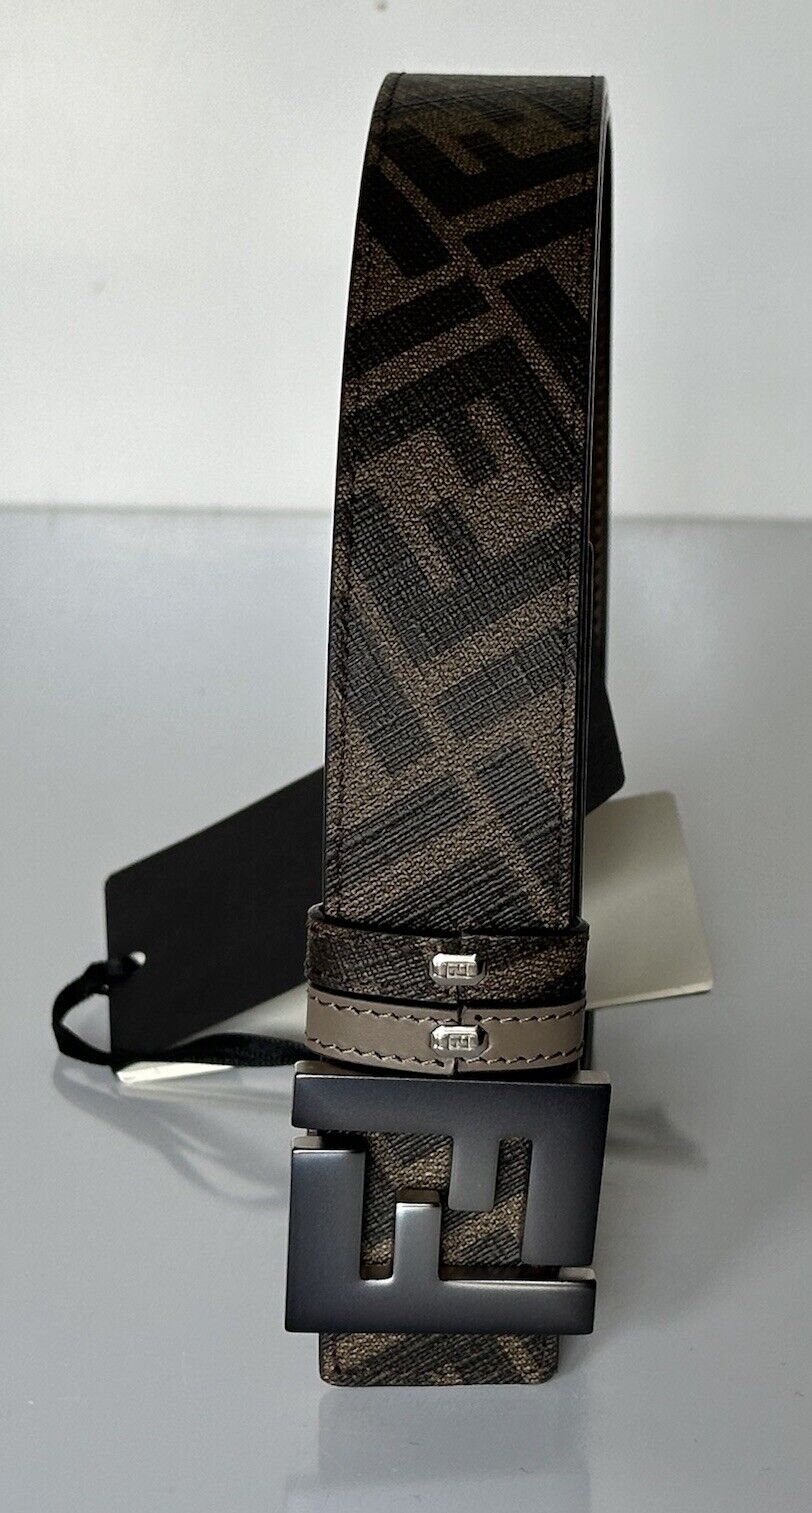 NWT $630 Fendi FF Calf Leather Tartufo/Black&Brown Reversible Belt 110/44 7C0468